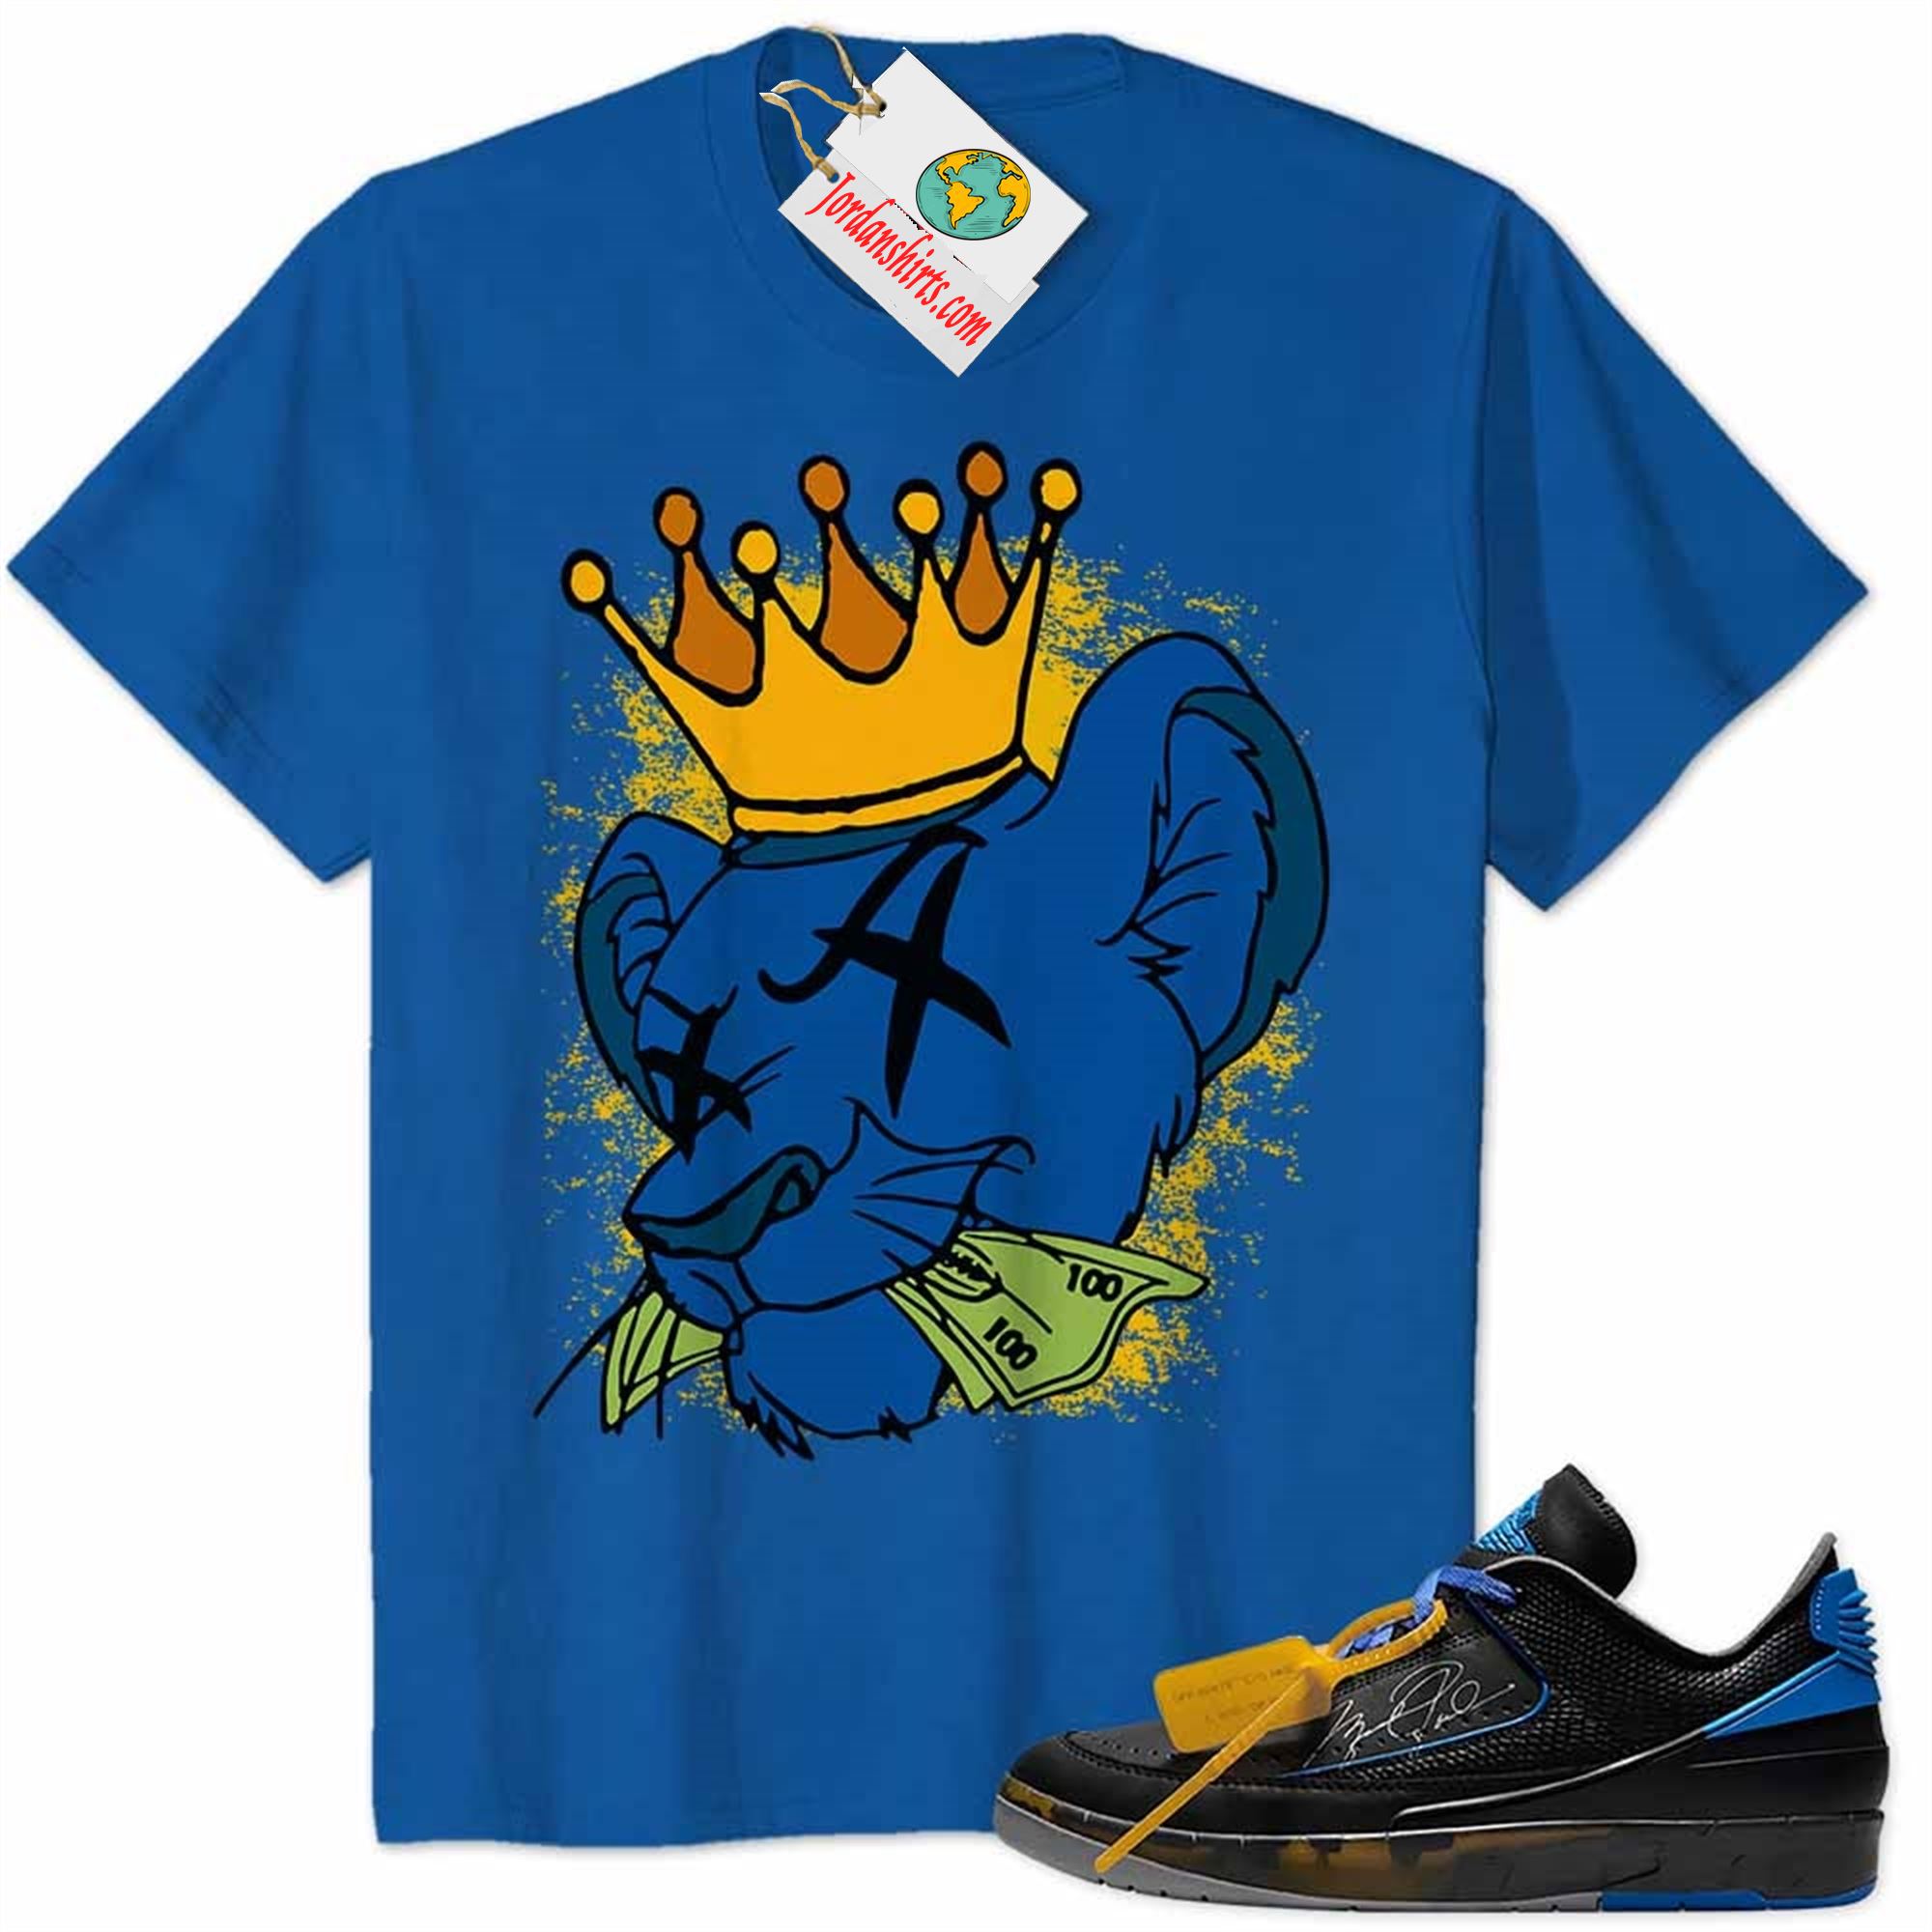 Jordan 2 Shirt, Simba Lion King With Crown Money Blue Air Jordan 2 Low X Off-white Black And Varsity Royal 2s Size Up To 5xl